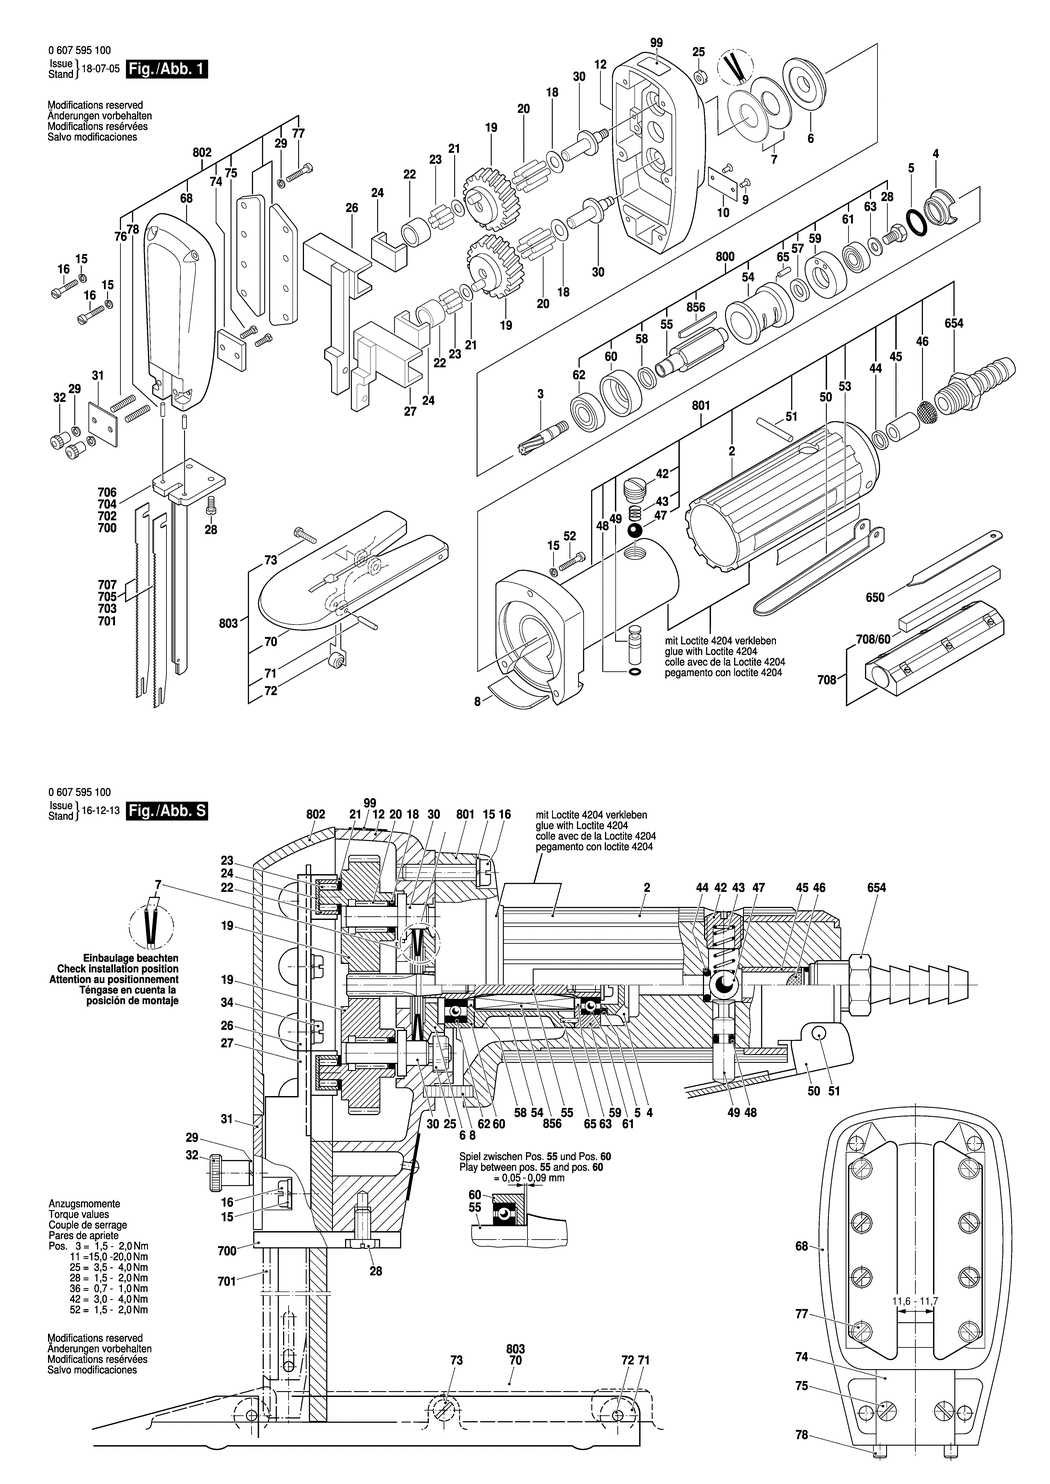 Bosch 7595-100 / 0607595100 / --- Spare Parts